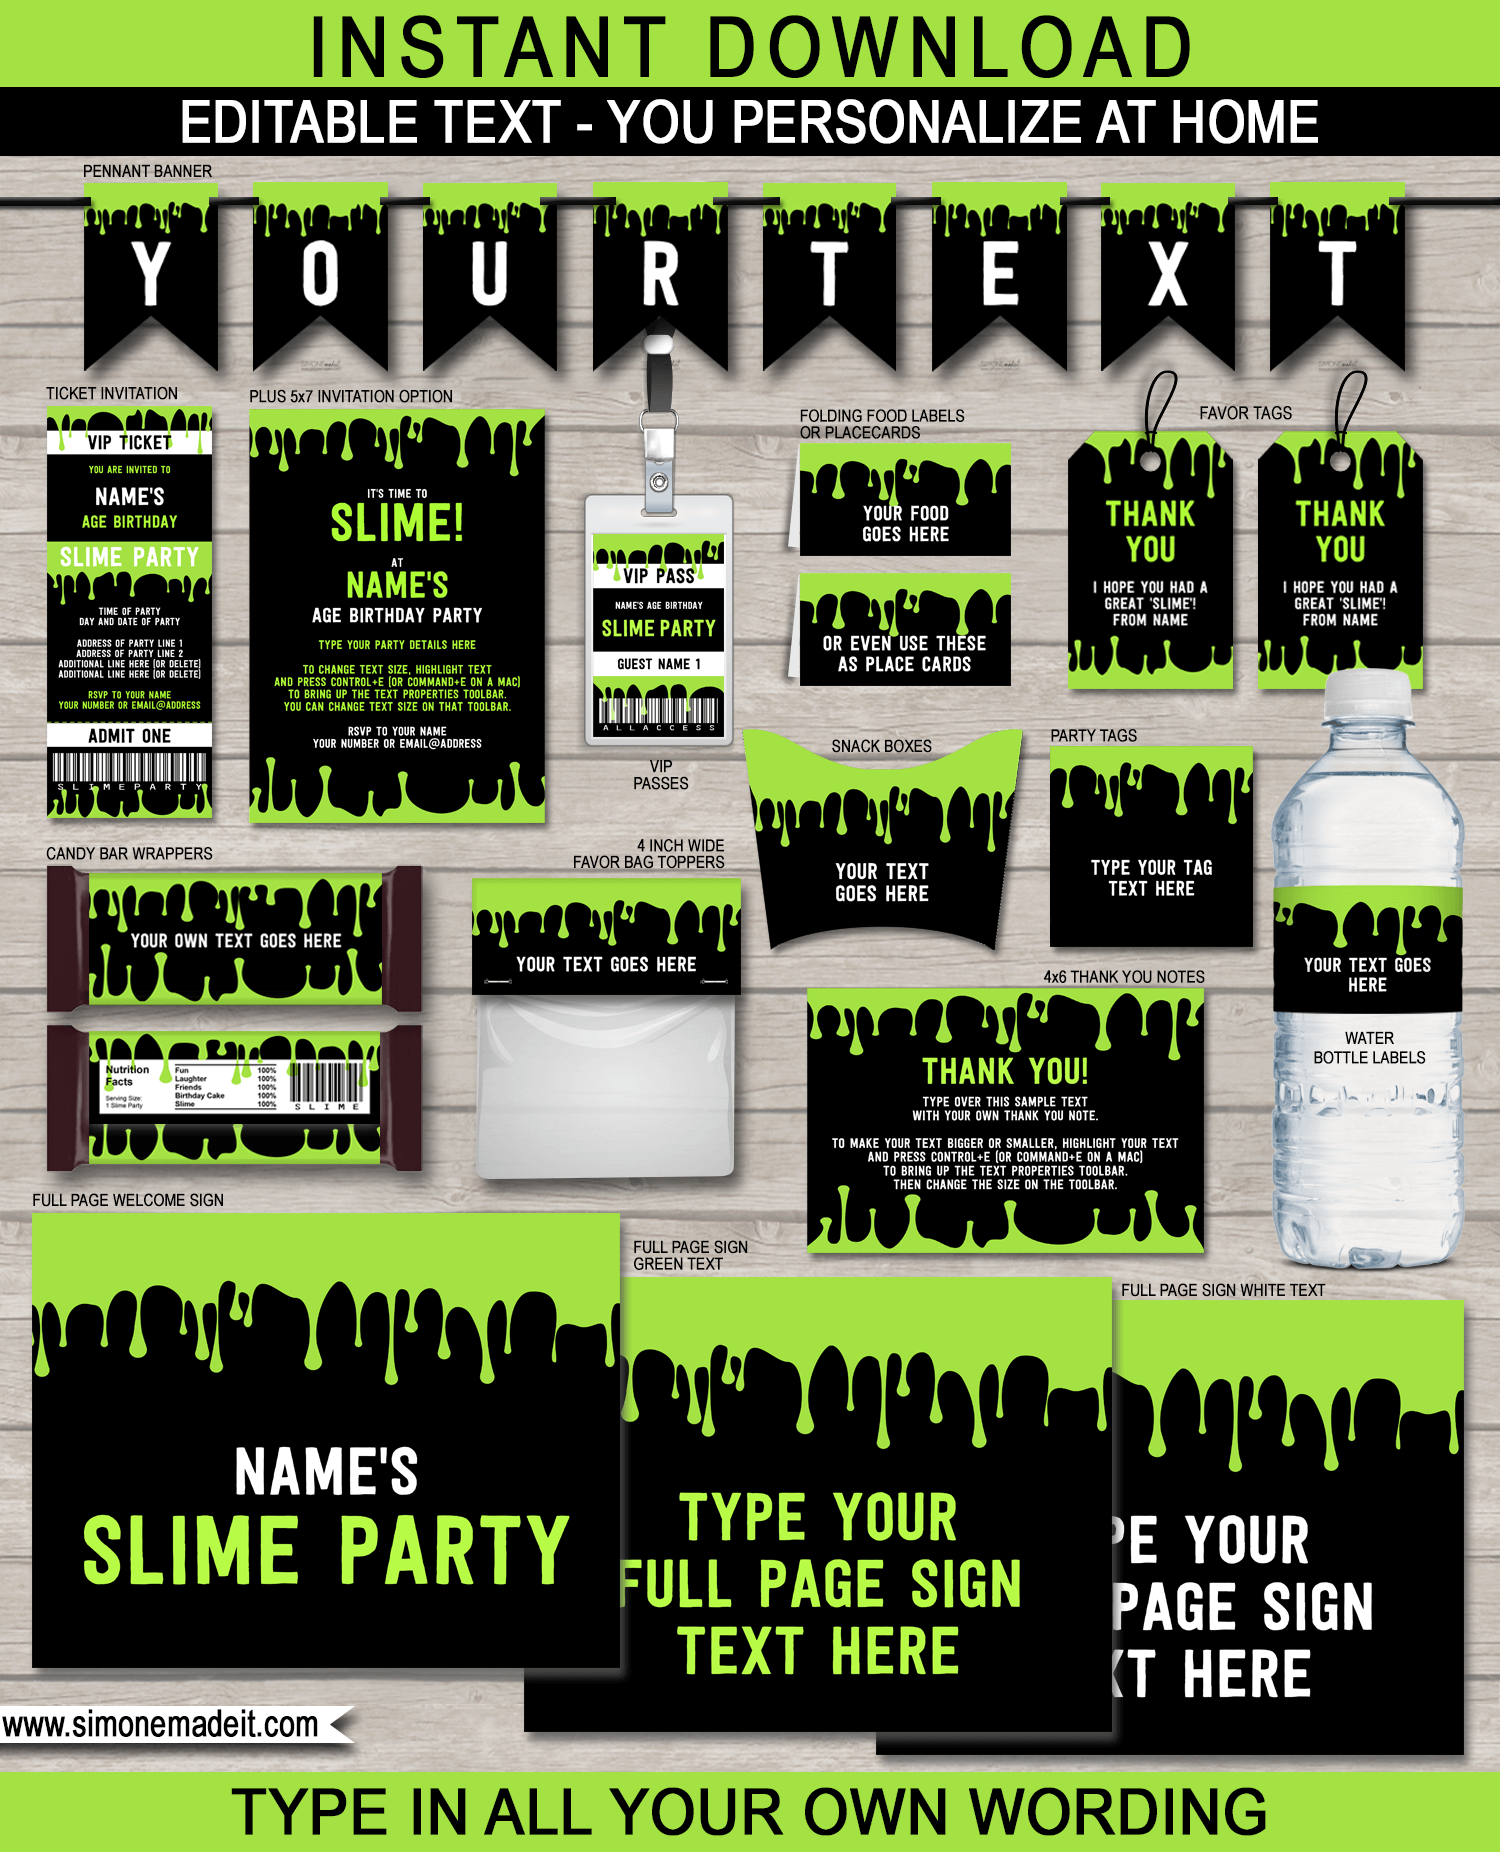 Slime Party Printables, Invitations & Decorations - Slime Theme Birthday Party - Editable & Printable DIY templates - INSTANT DOWNLOAD via simonemadeit.com